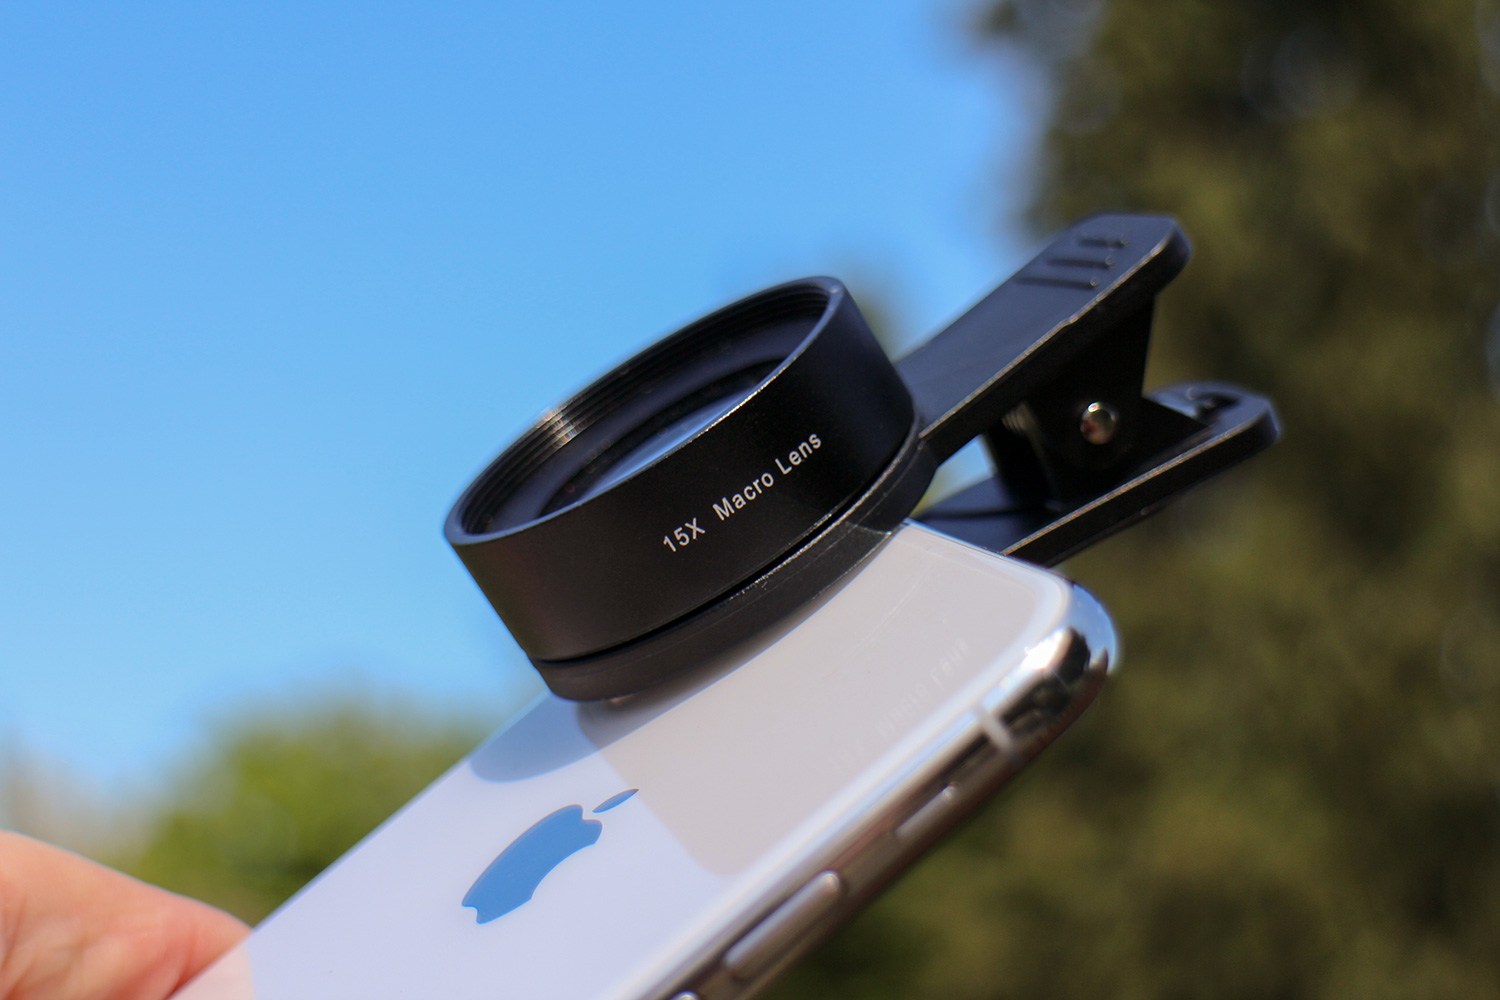 smartphone macro lens camera shootout wd06